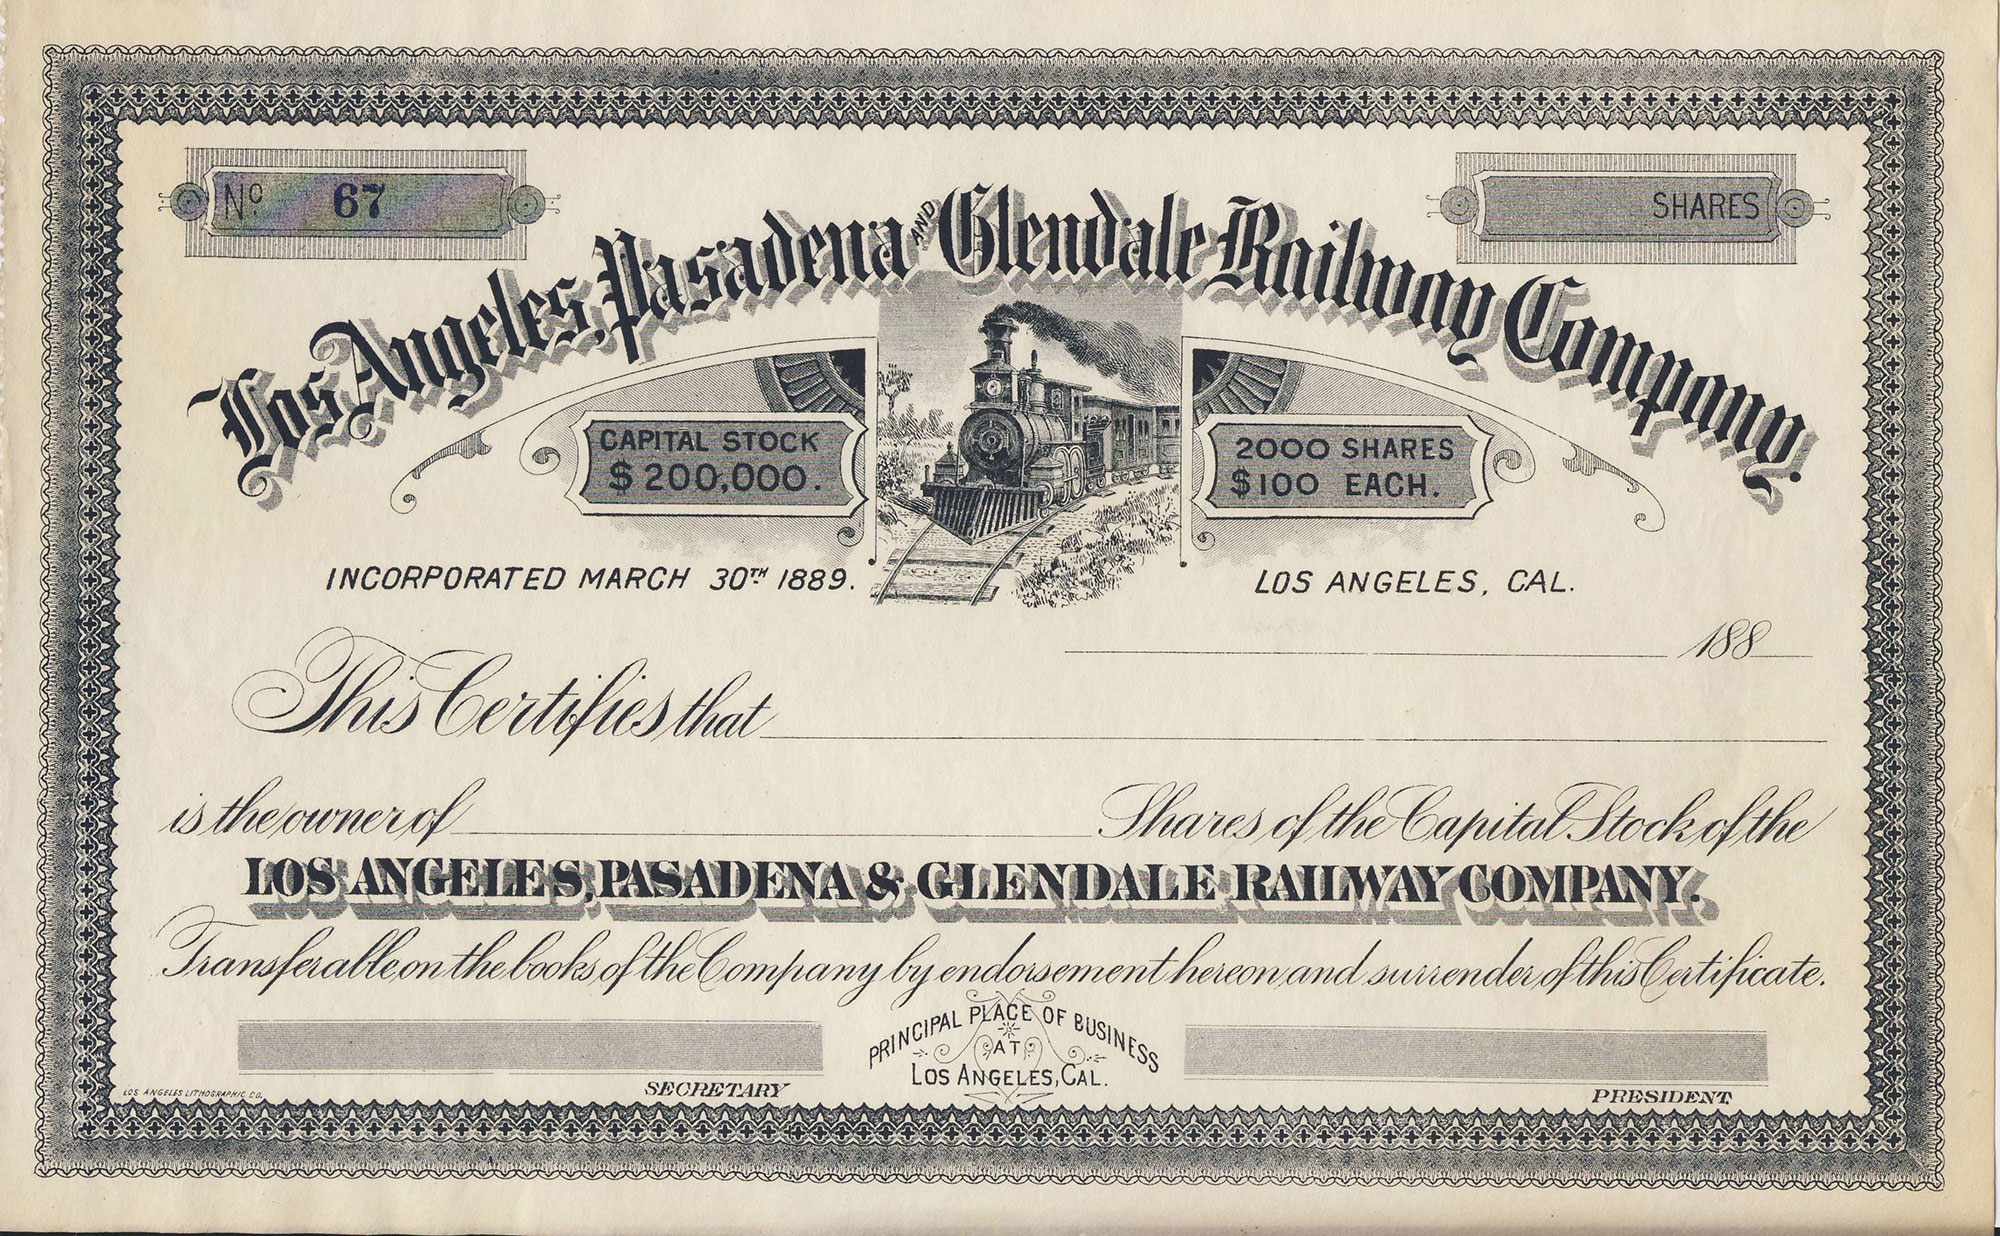 Printable Stock Certificate